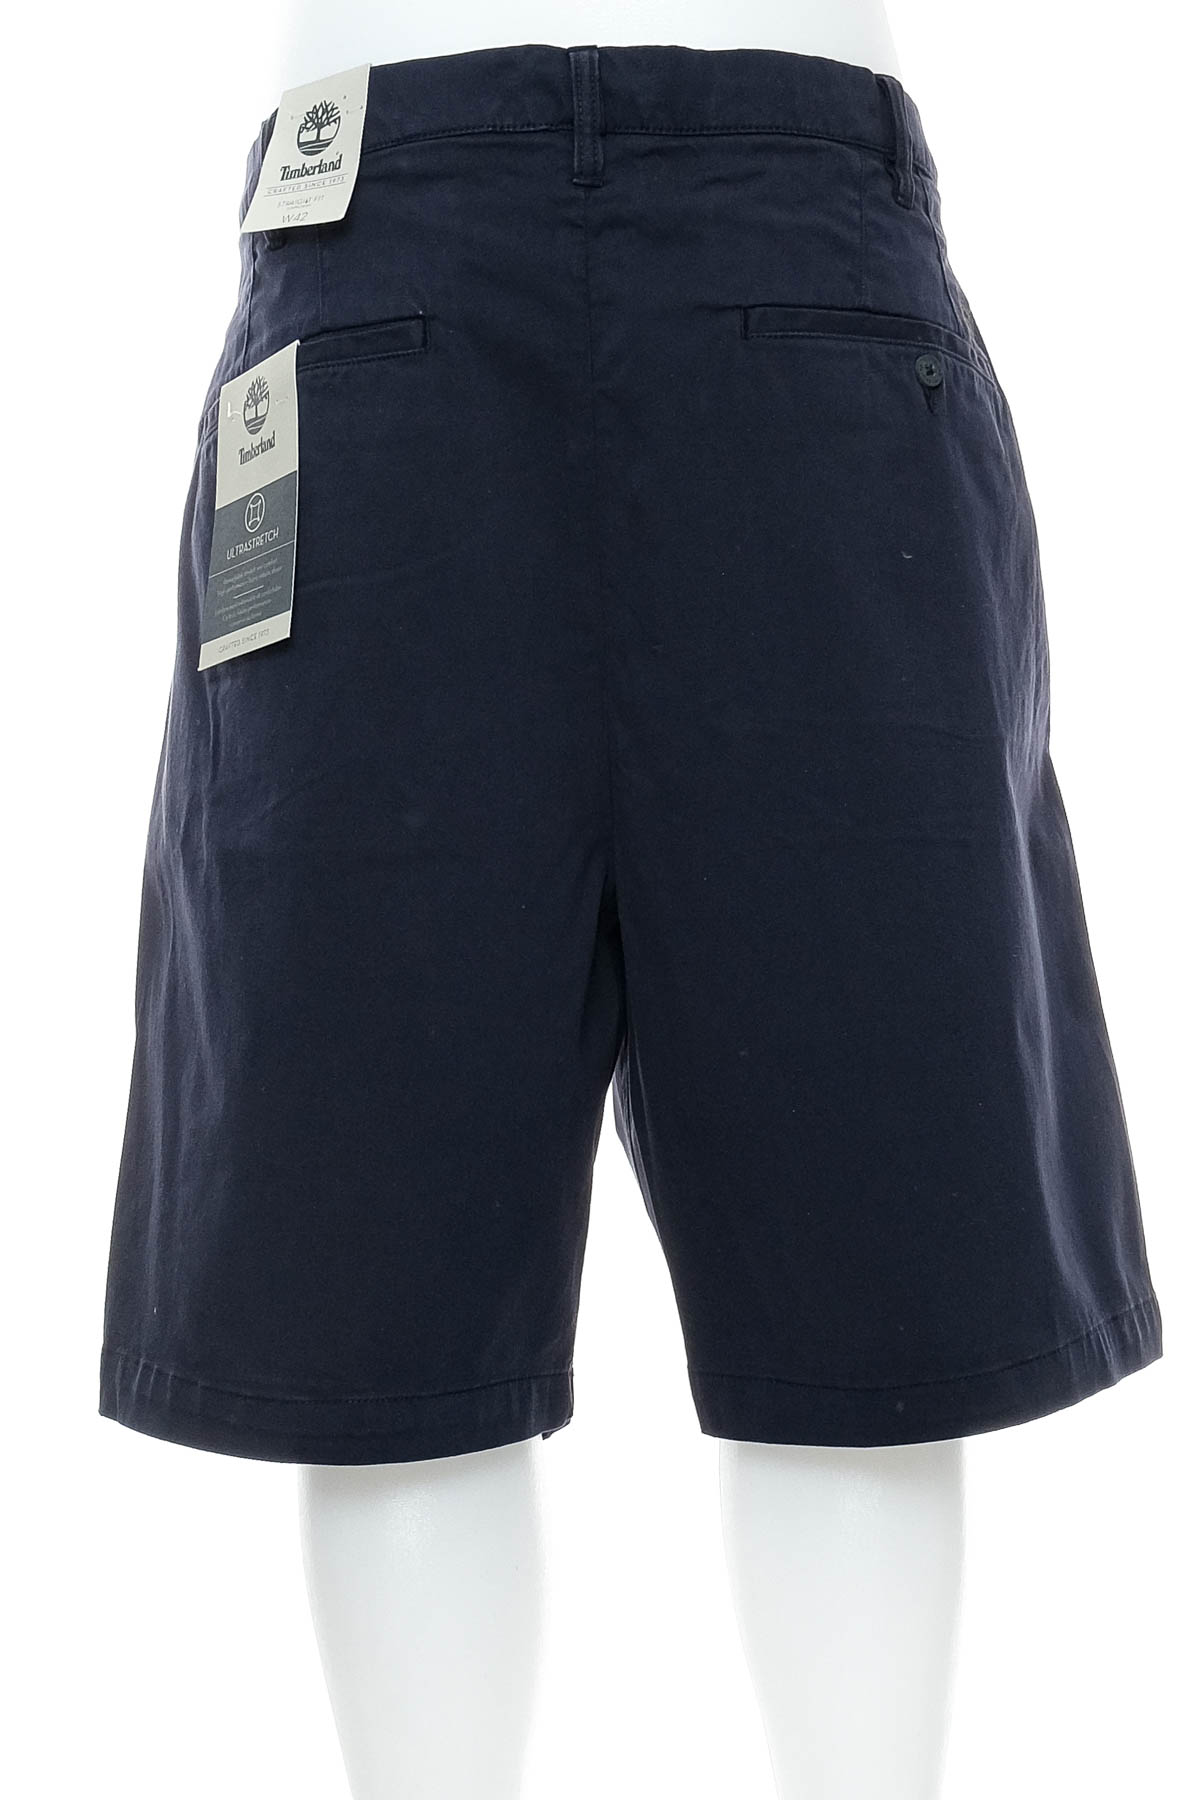 Pantaloni scurți bărbați - Timberland - 1